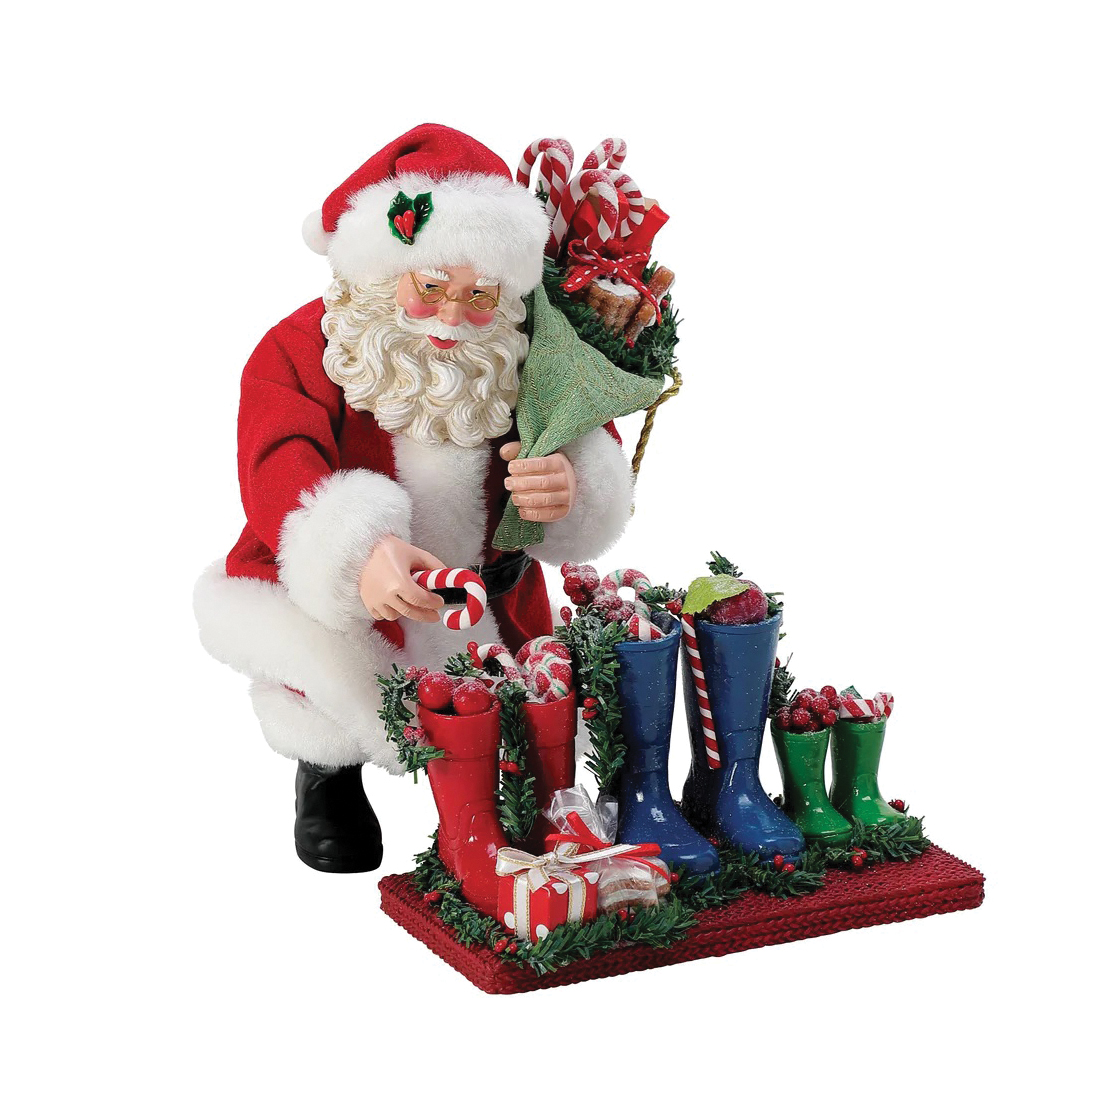 enesco gift Christmas Traditions Series 6012254 Figurine, 8 in H, Santa, St Nicholas Day - 1